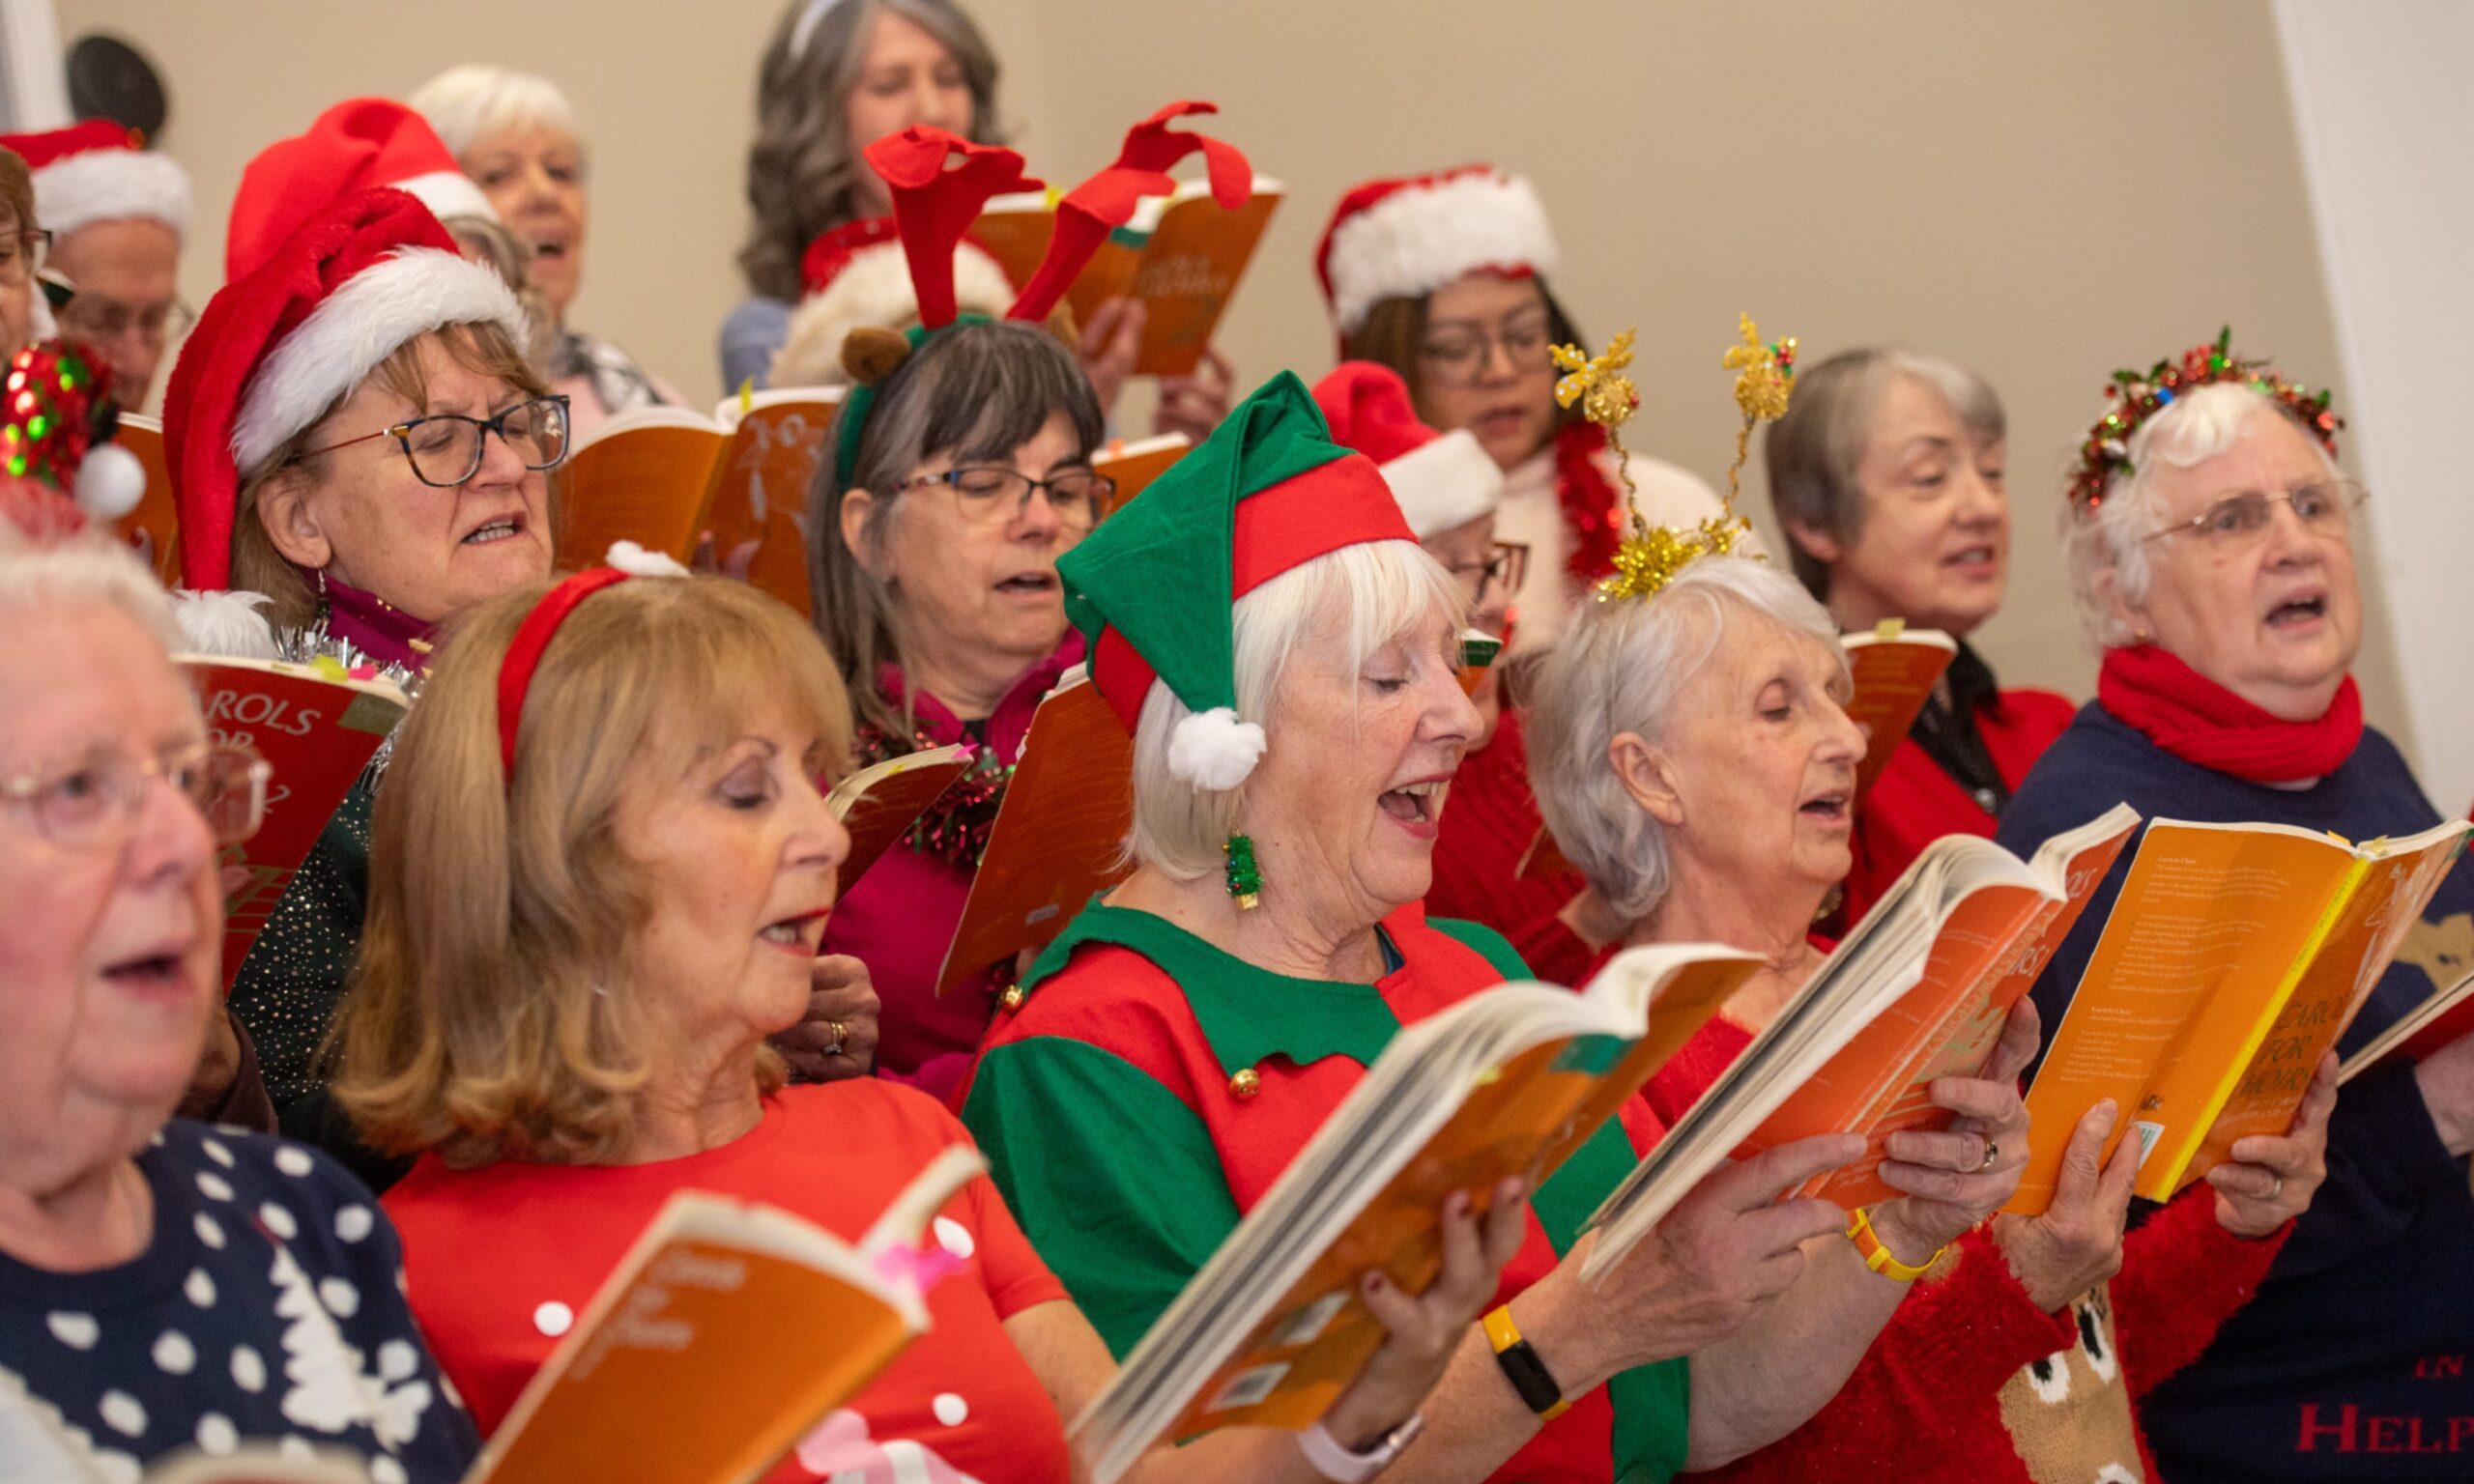 The Aberdeenshire carol singers bringing joy to the world